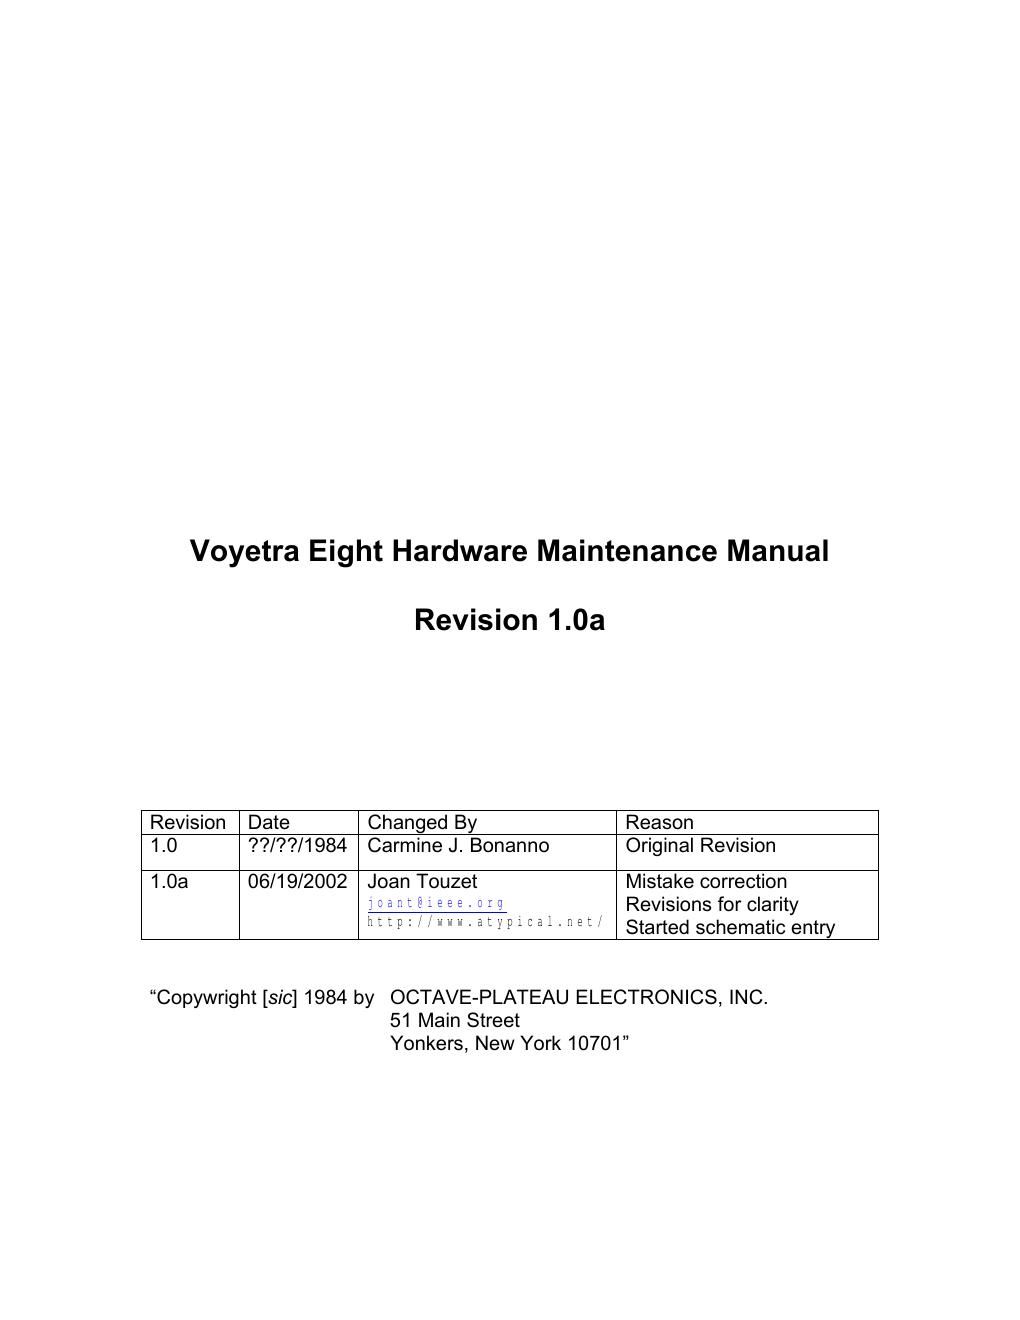 octave voyetra 8 maintenance manual